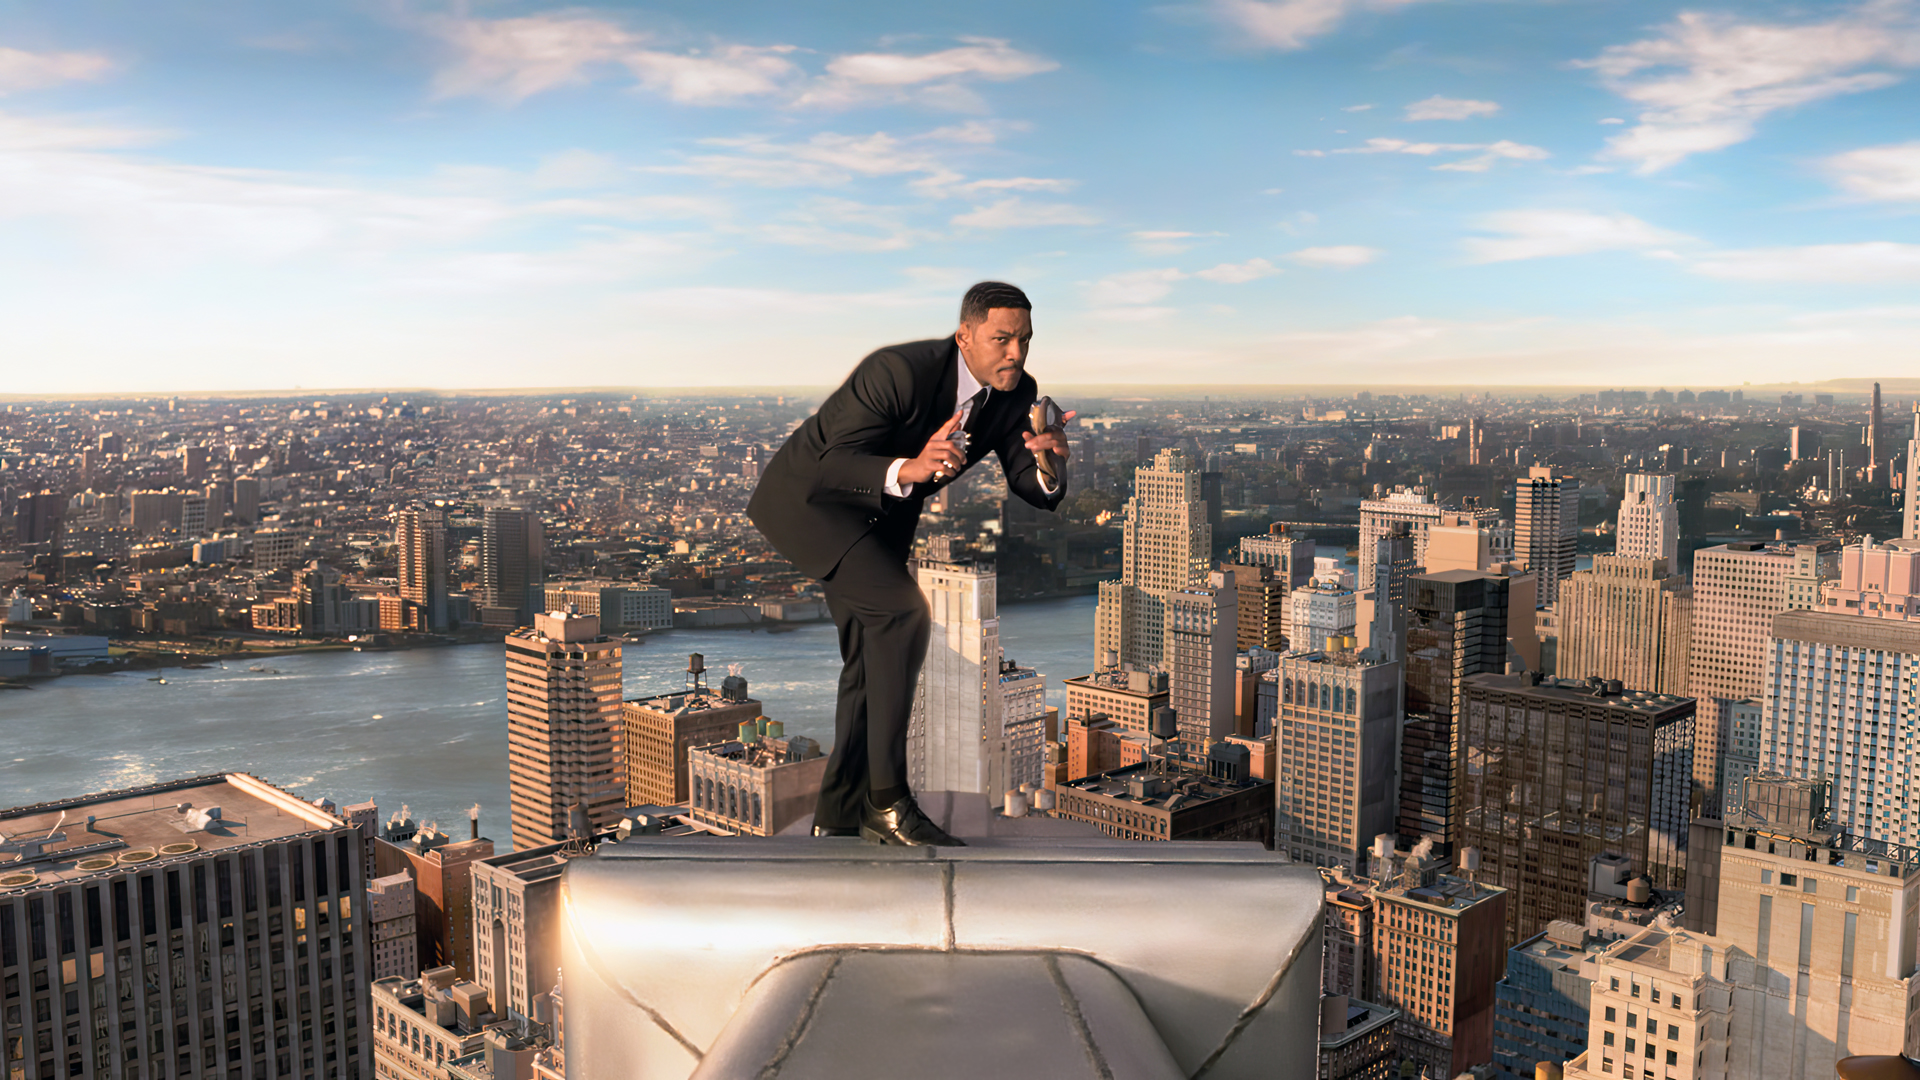 Men In Black 3 Movies Film Stills Will Smith Agent J Actor Men Suit And Tie New York City Building C 1920x1080